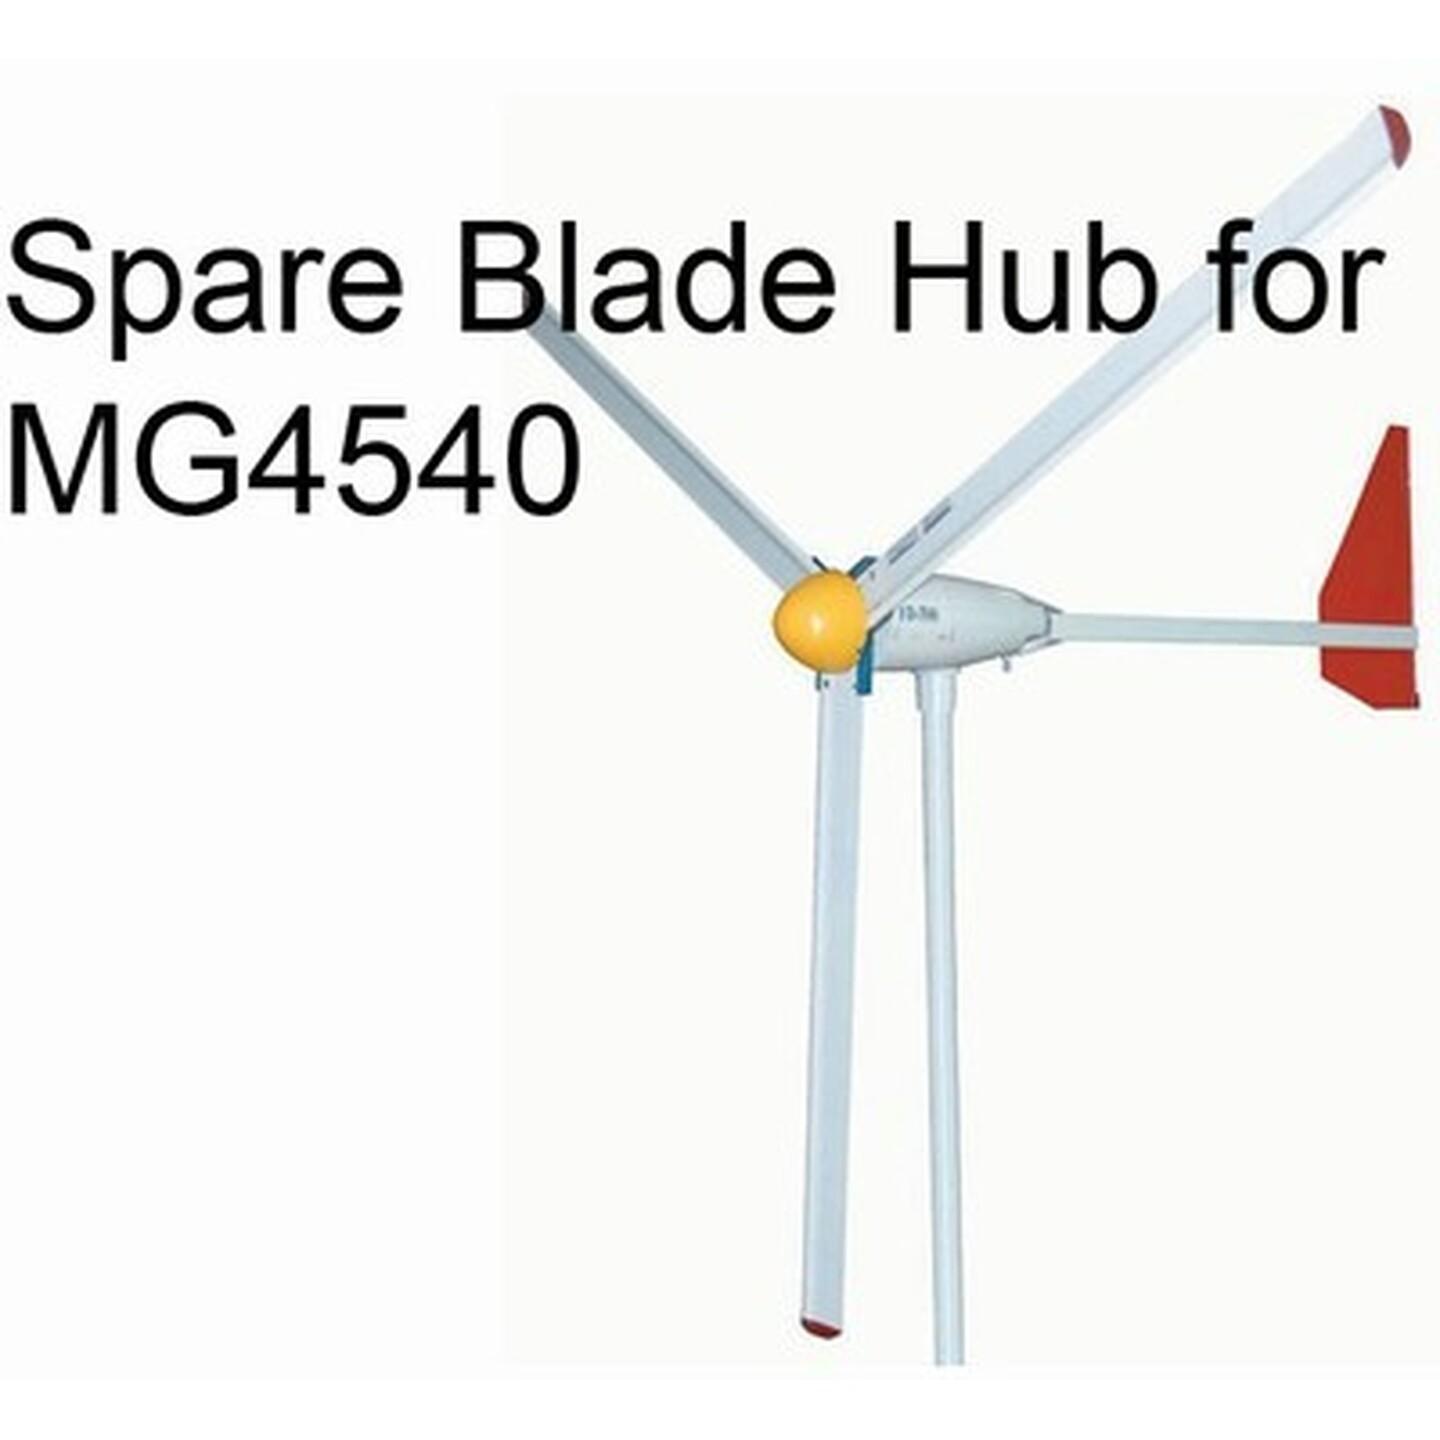 Spare Blade Hub for MG4540